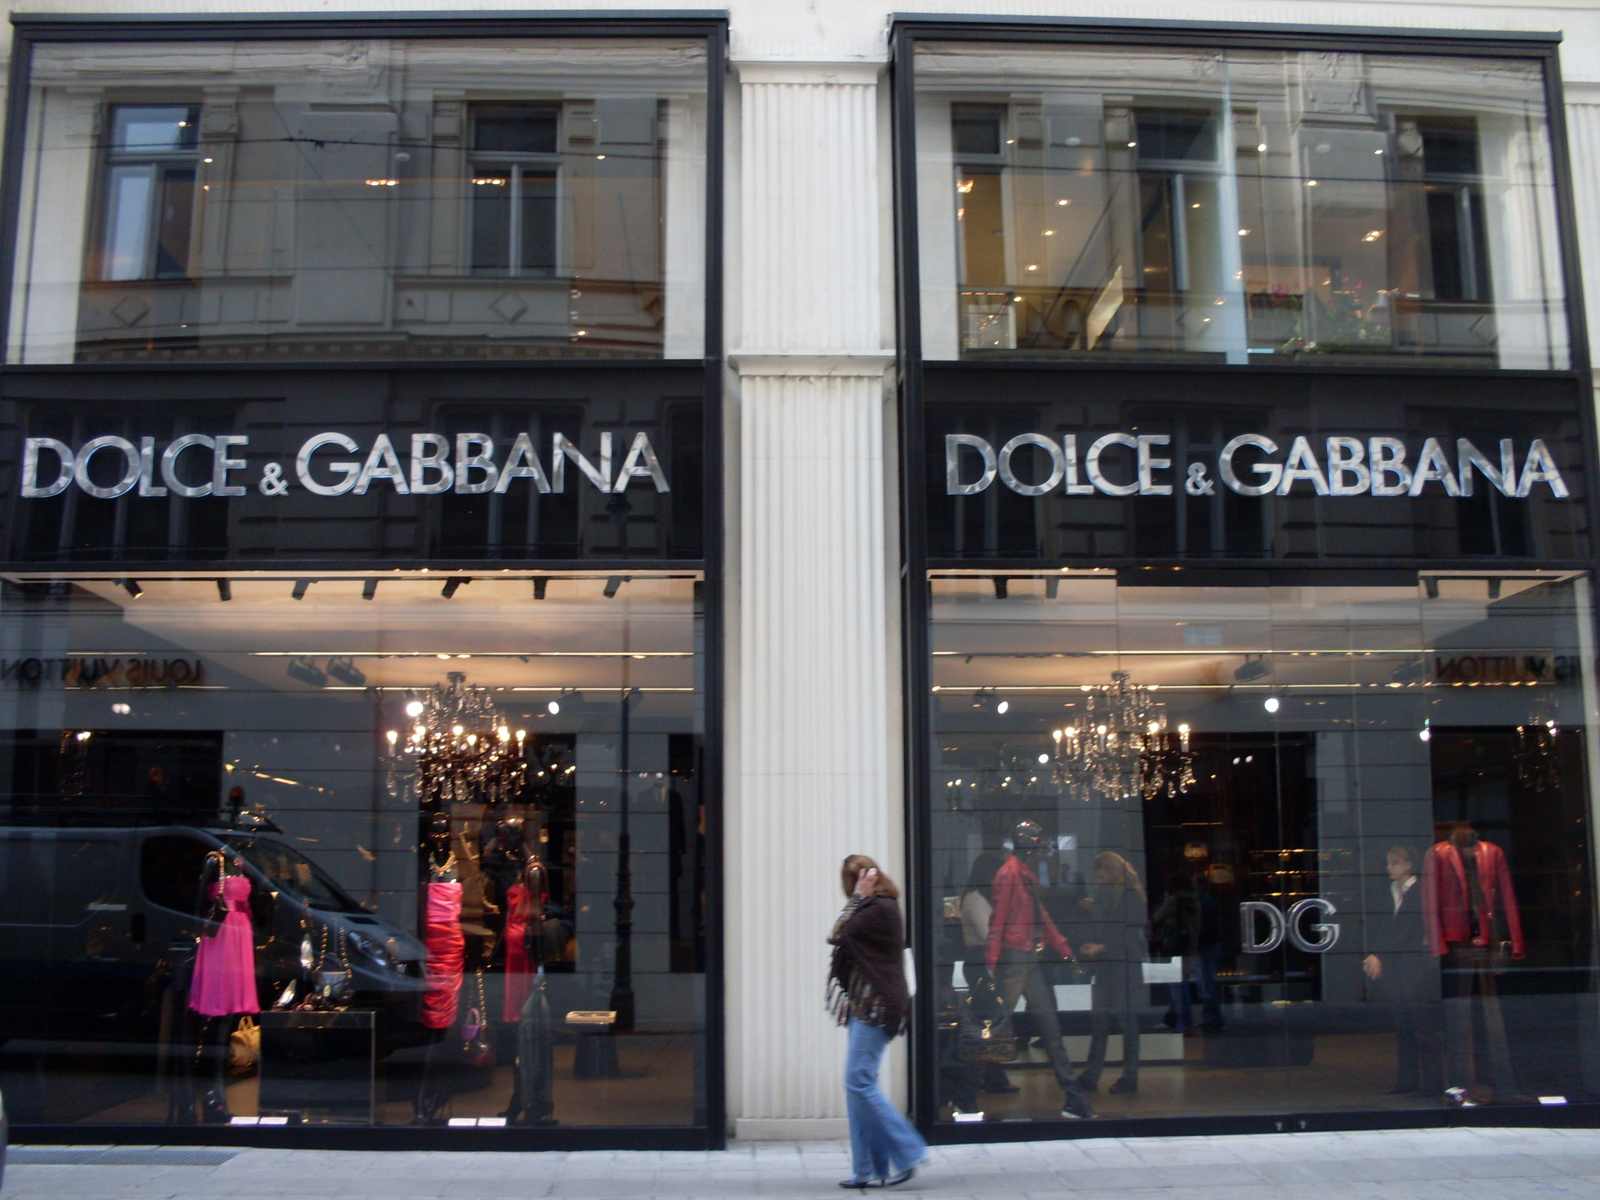 Mariahilfer Strasse (Dolce&Gabbana)